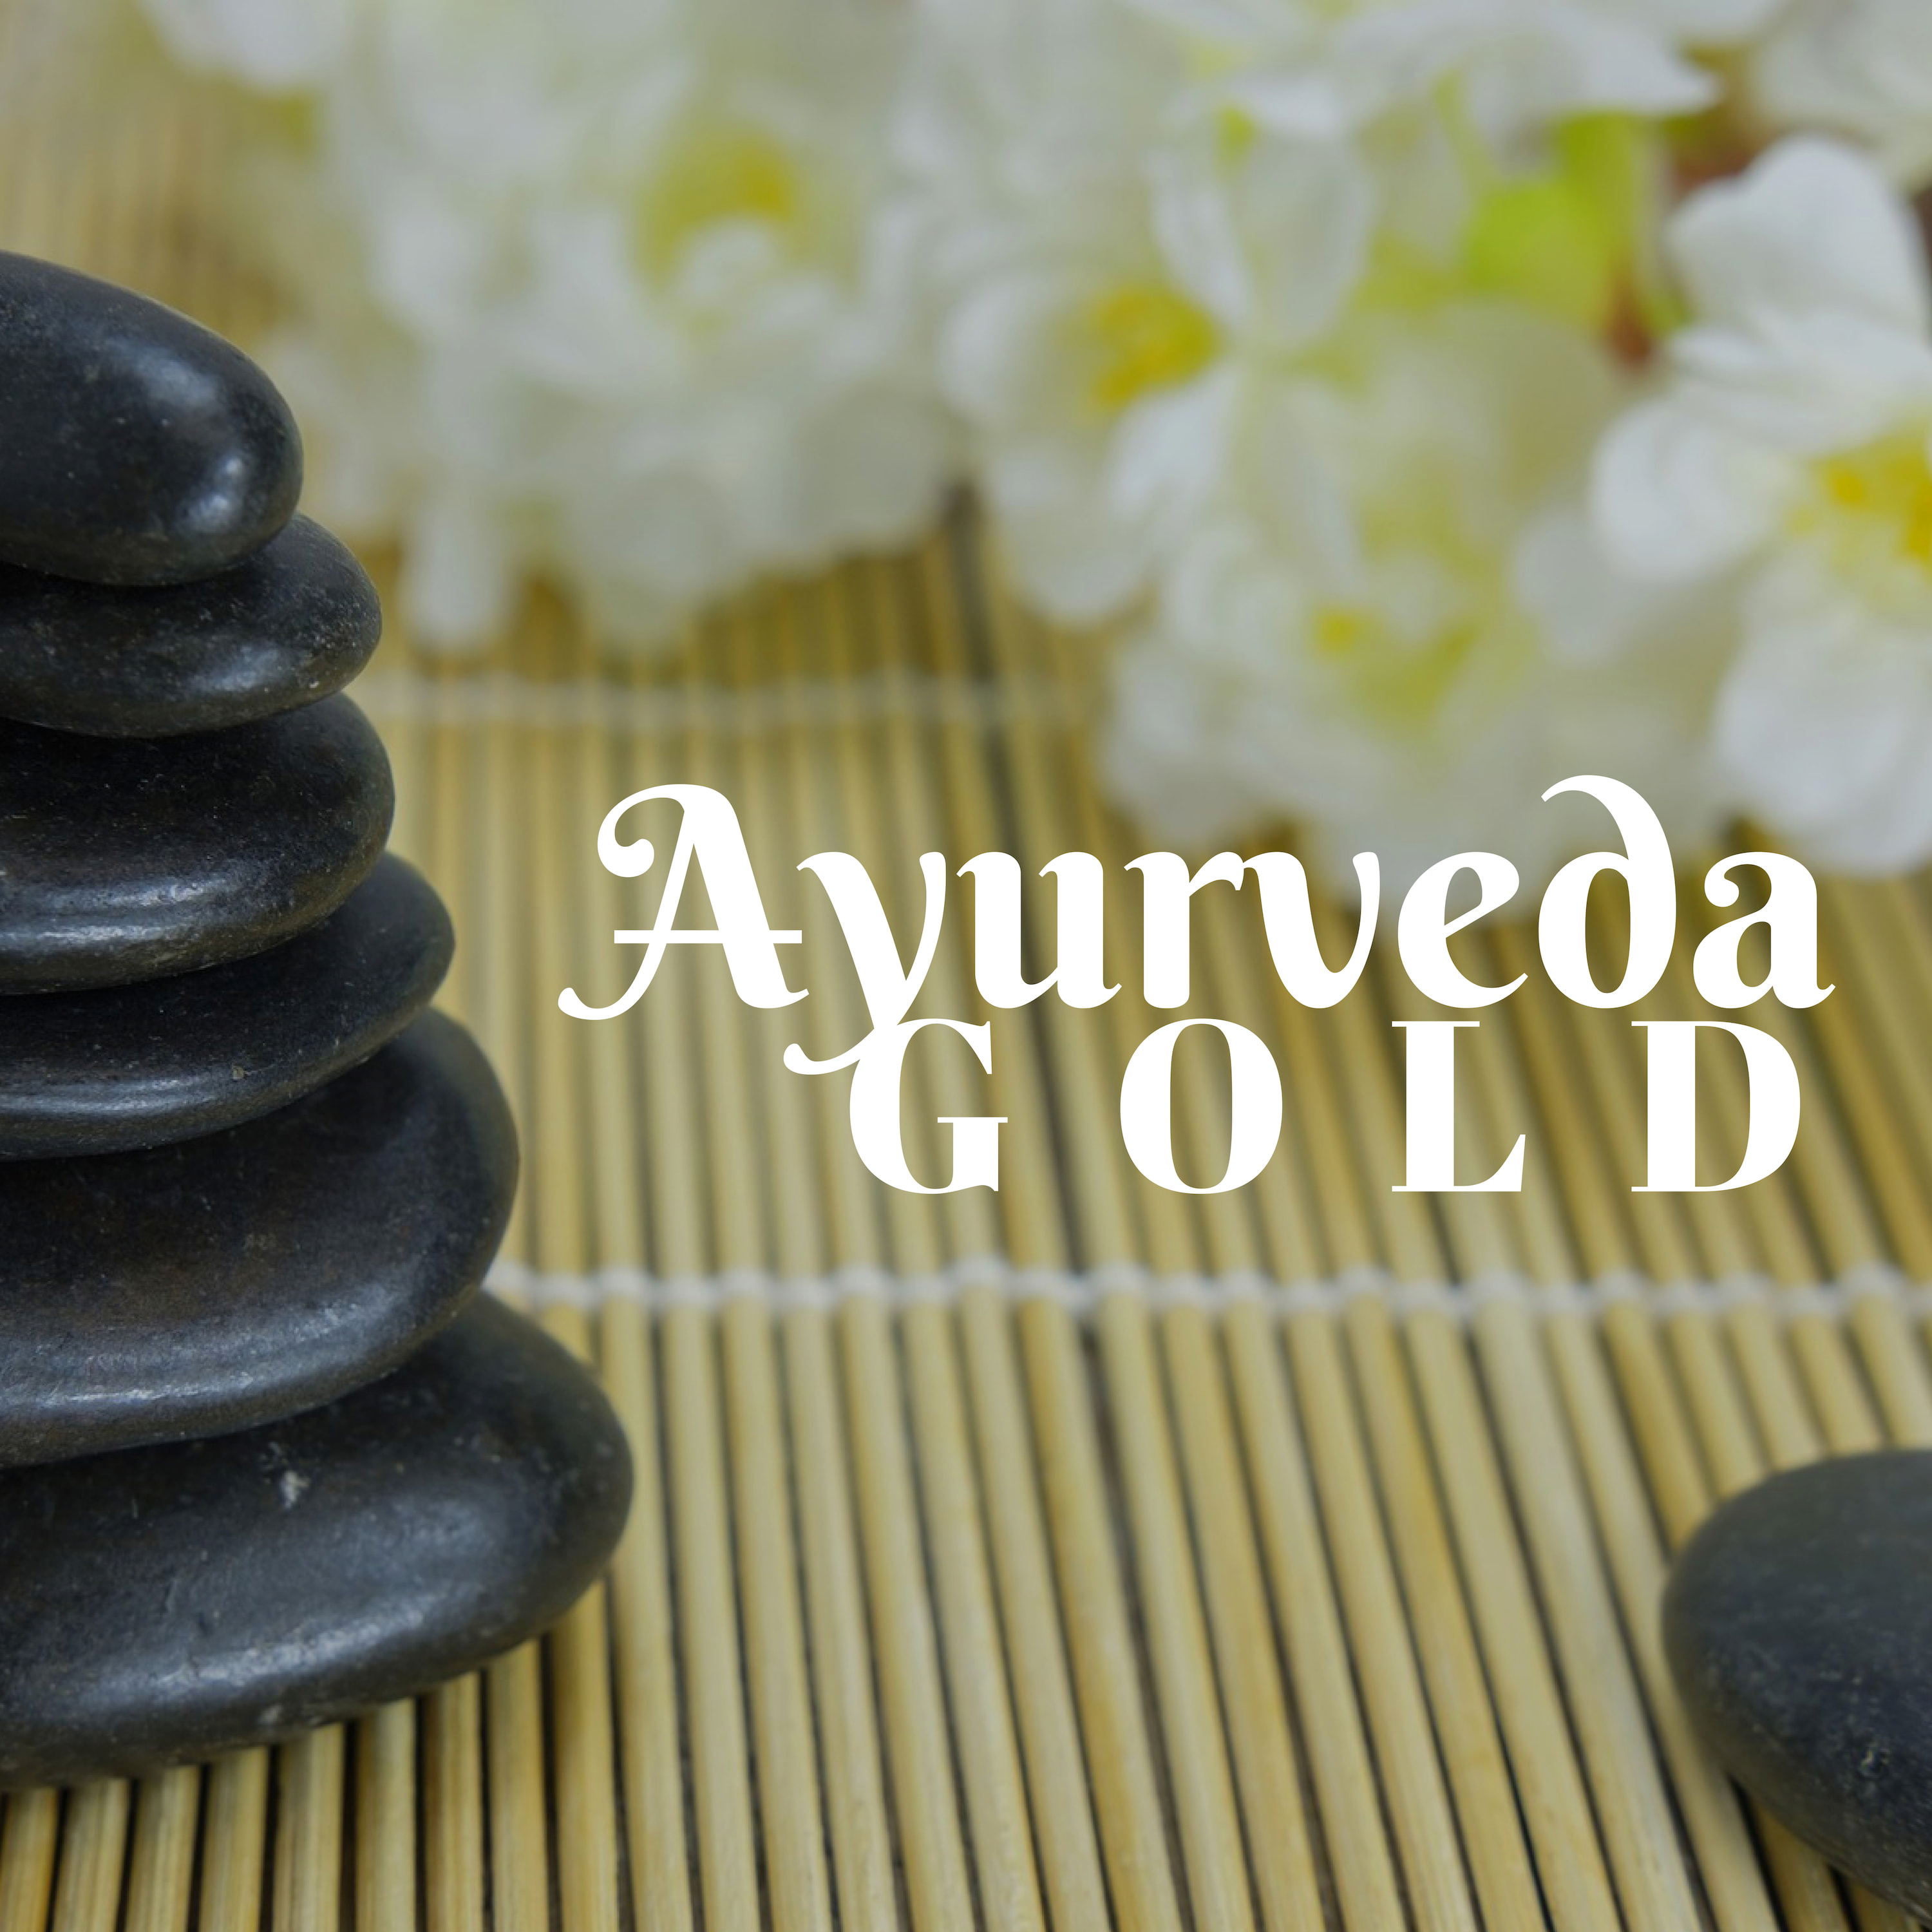 Ayurveda Gold - Full Album of Soothing Music for Sleeping